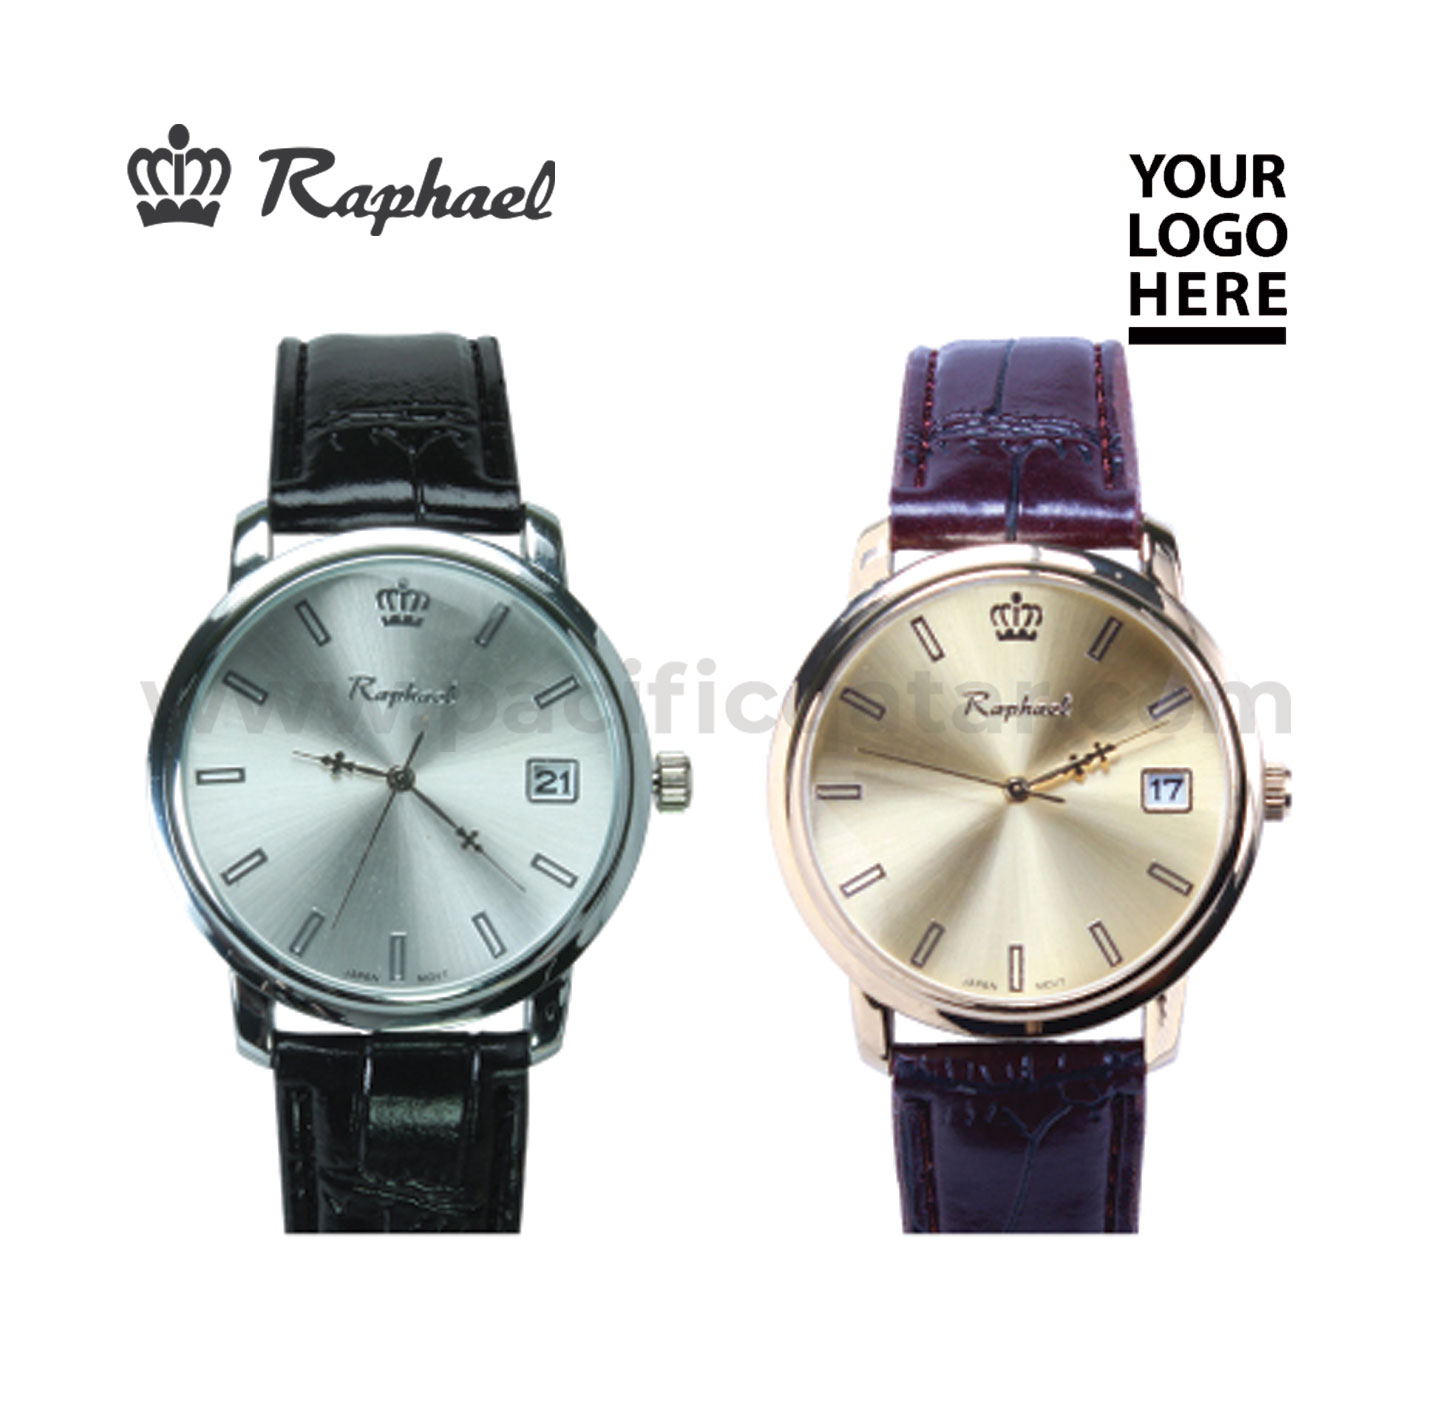 Raphael Watches